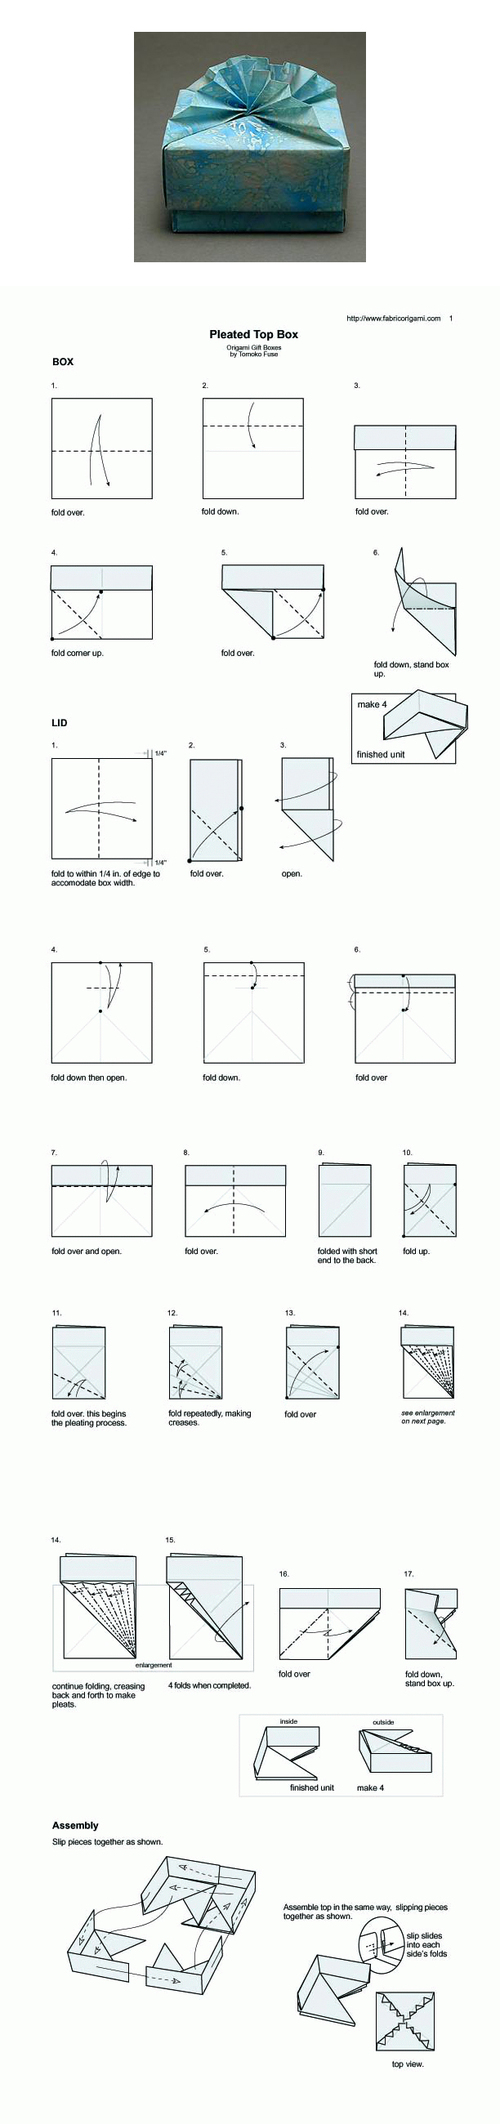 Origami Pleat Fold Origami Pleated Top Box Folding Instructions Origami Instruction